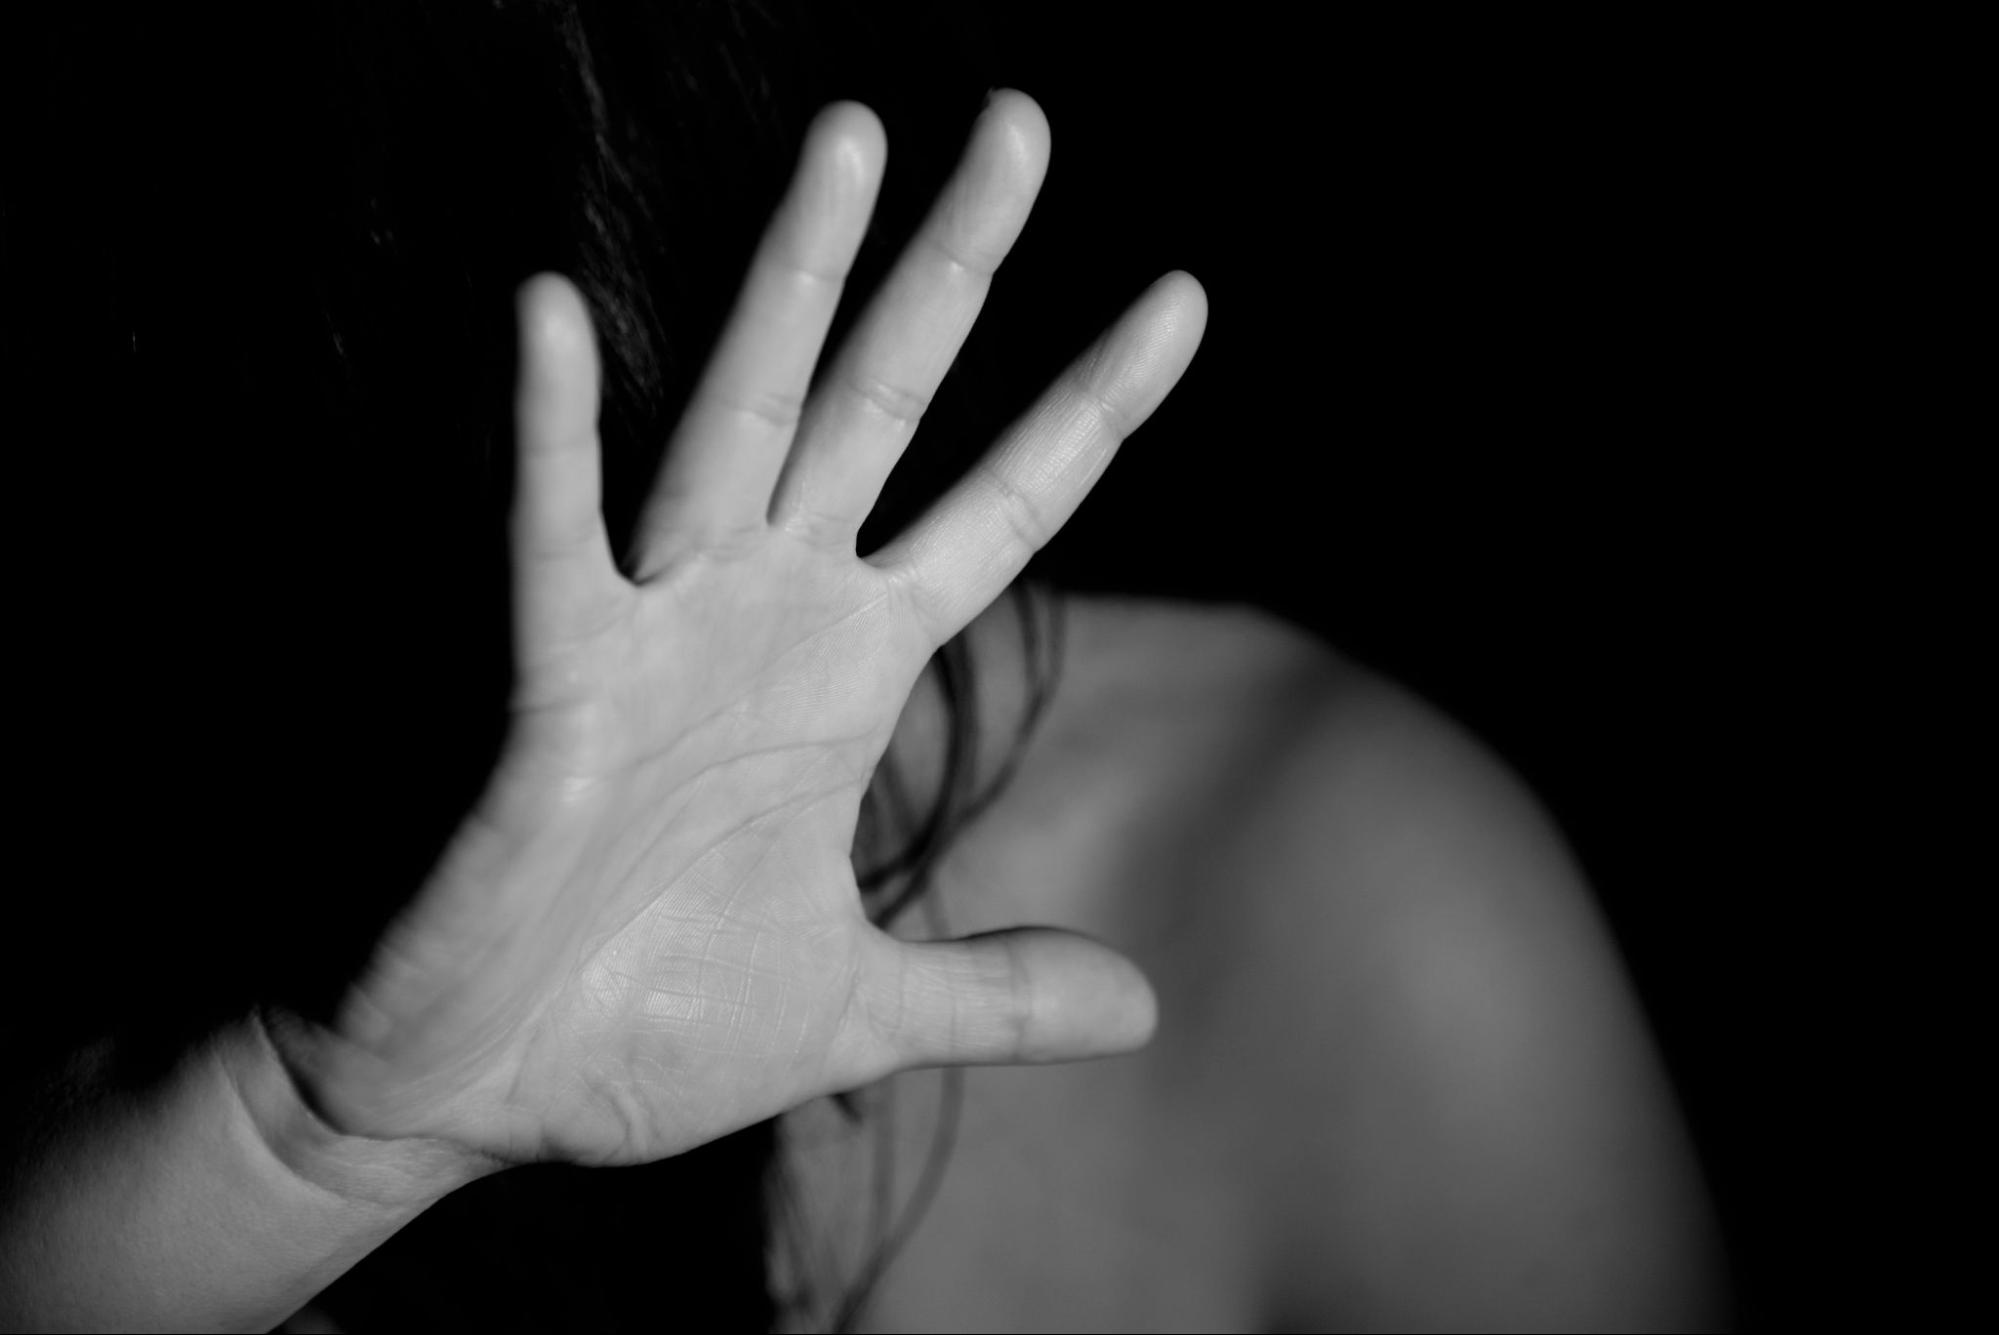 Domestic Violence, Violence against women